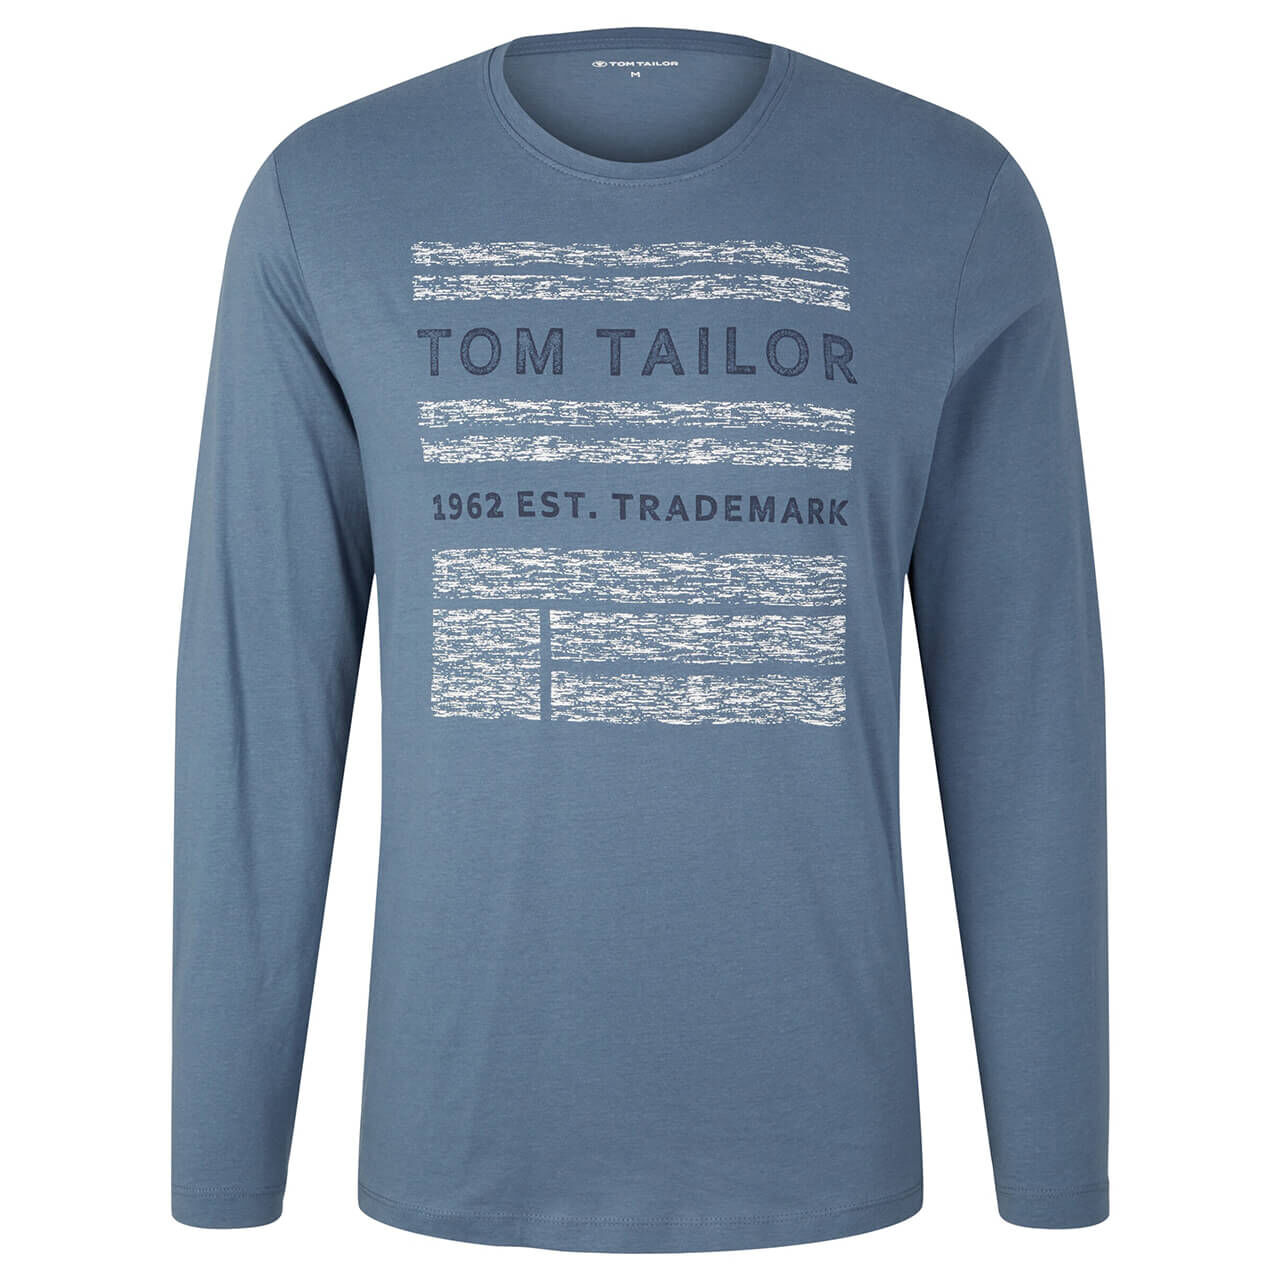 Tom Tailor Herren Langarm Shirt china blue print